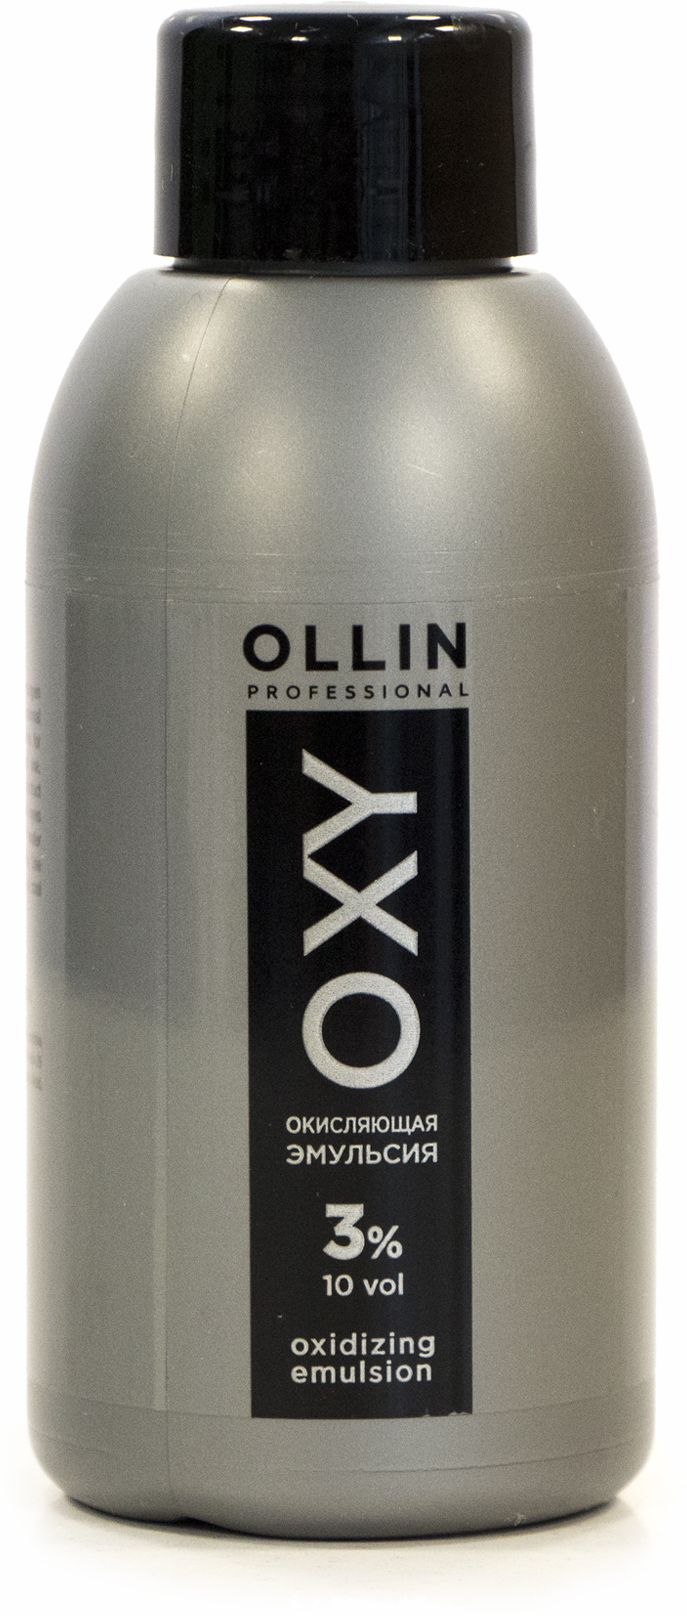 Ollin Professional Окисляющая эмульсия 3% 10vol., 90 мл (Ollin Professional, ) - фото №6